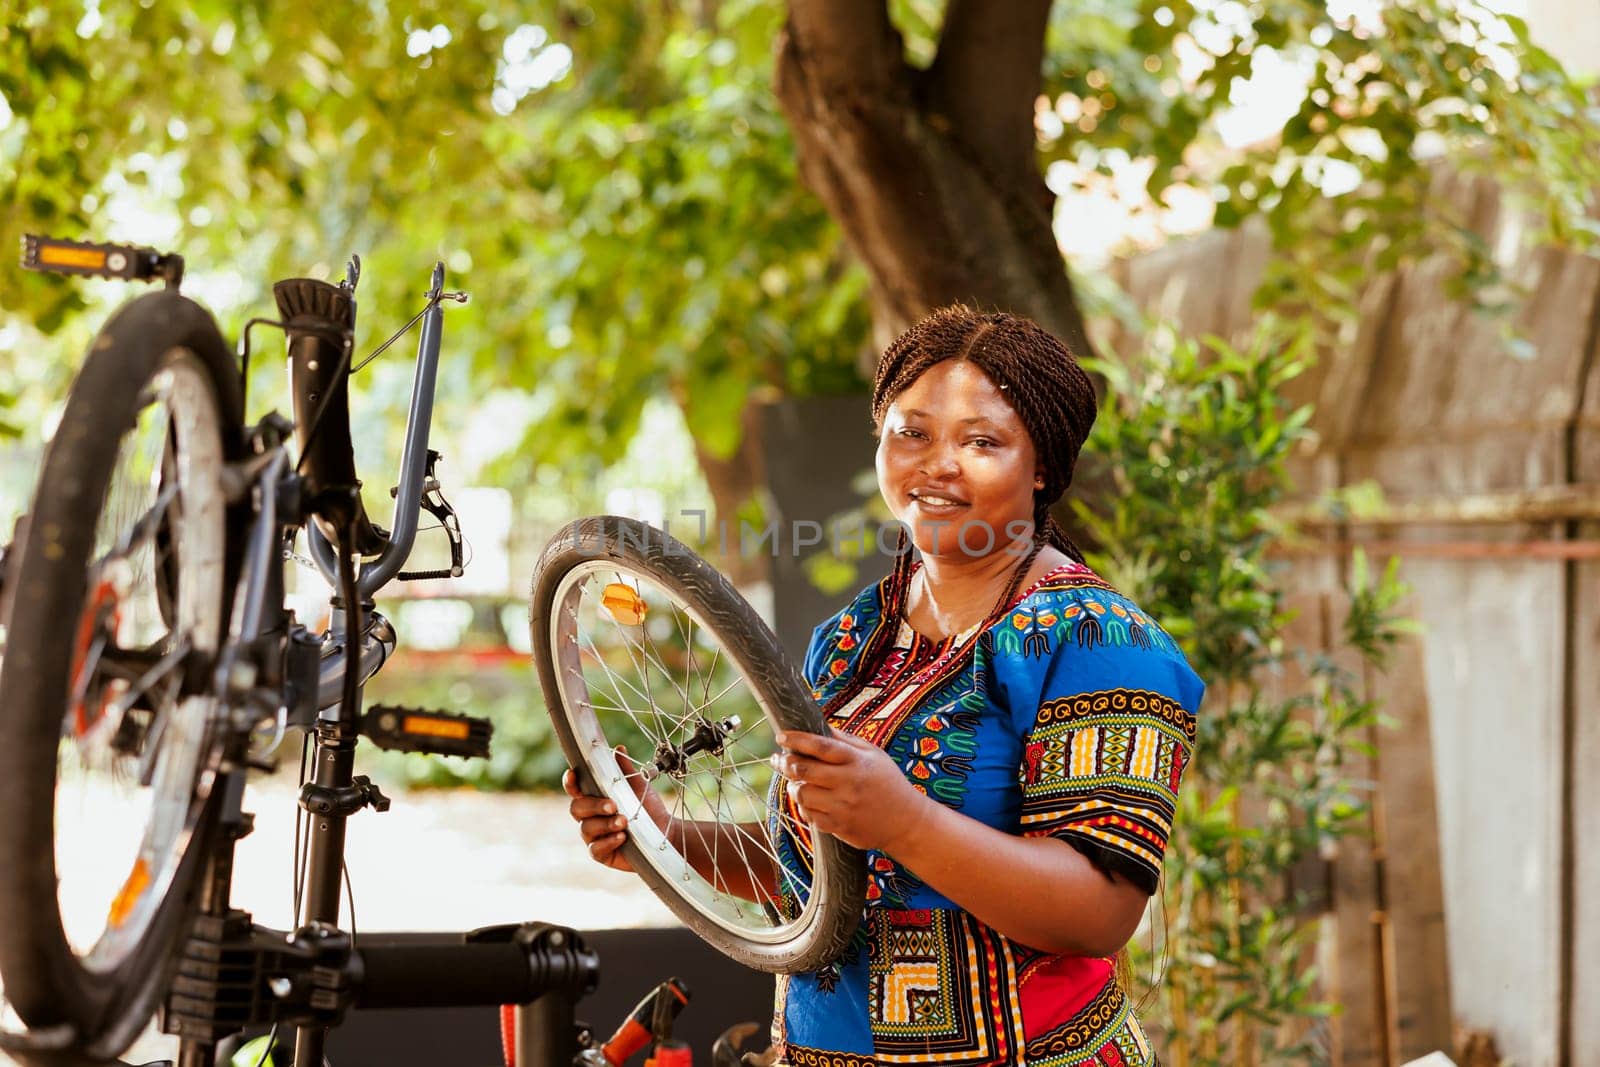 Woman holding bike wheel for maintenance by DCStudio